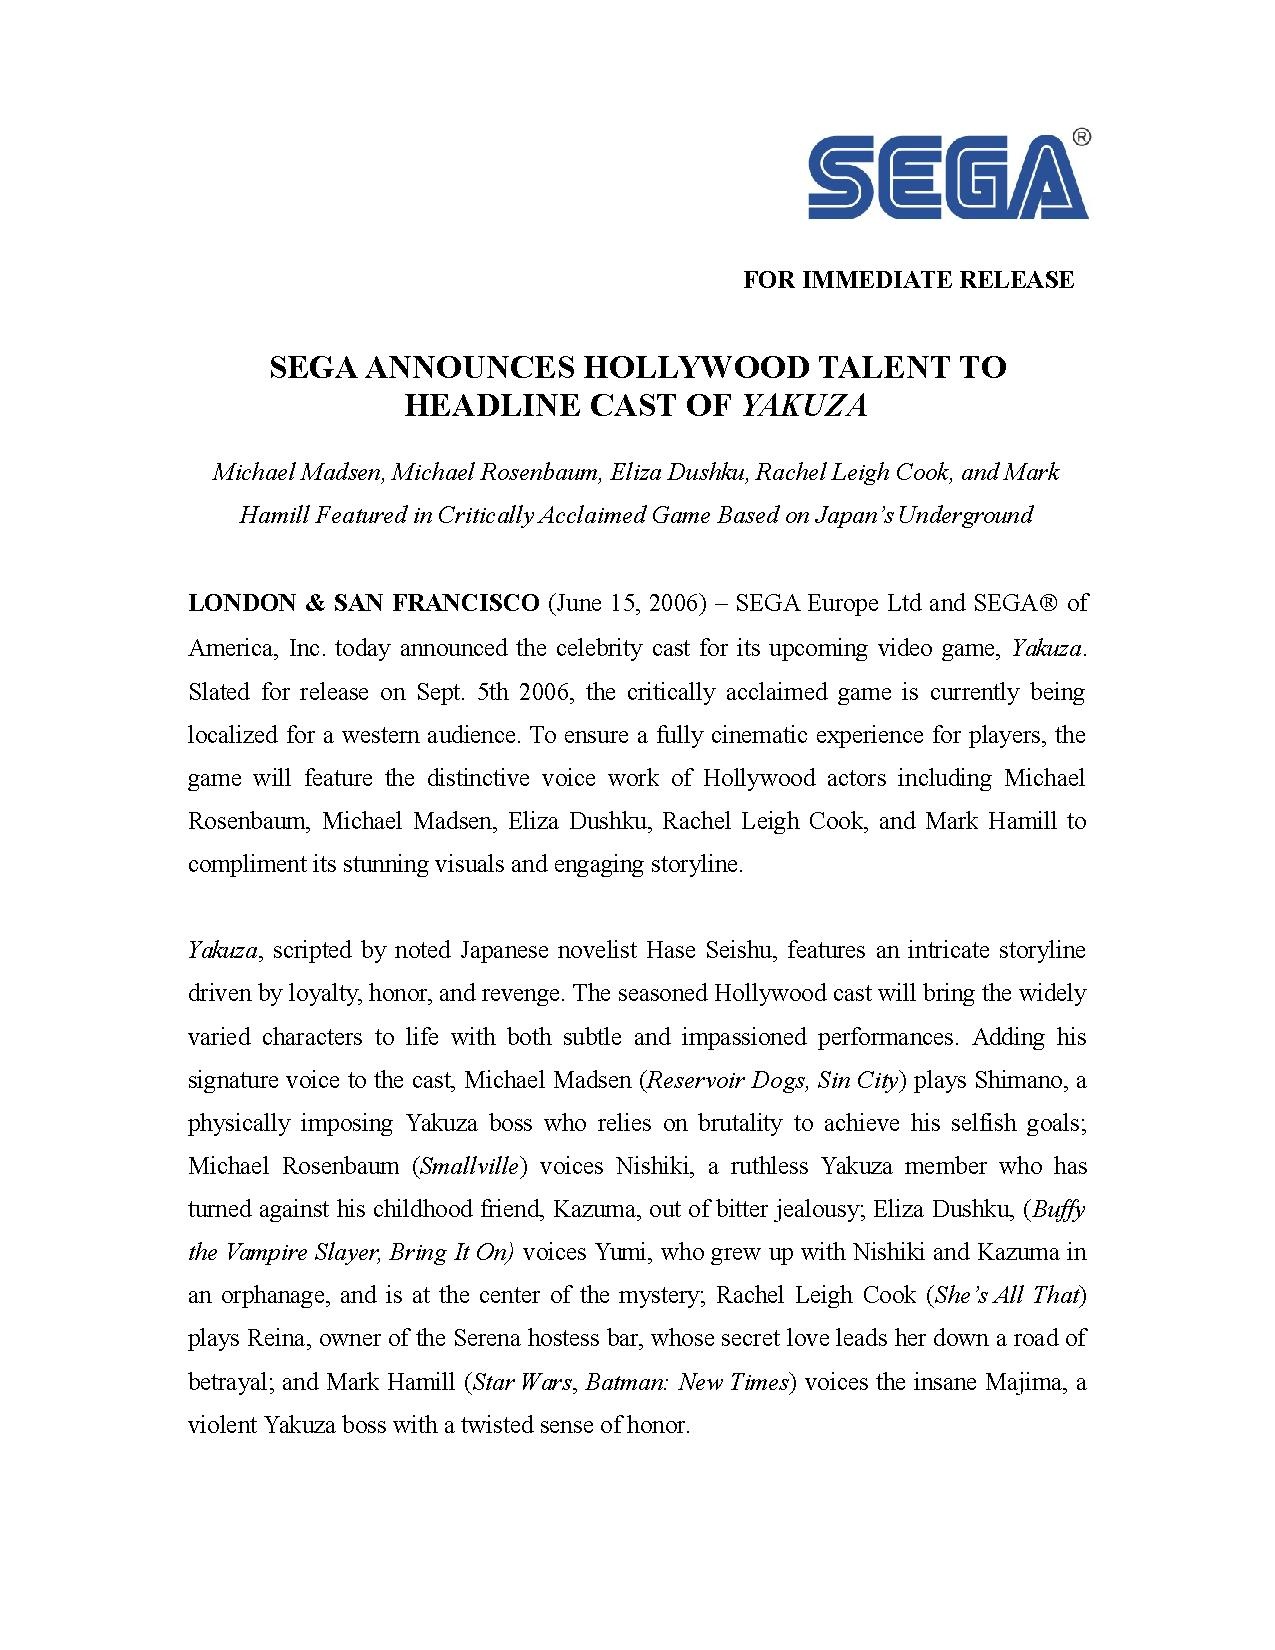 Yakuza Celebrity Annc Draft8.pdf